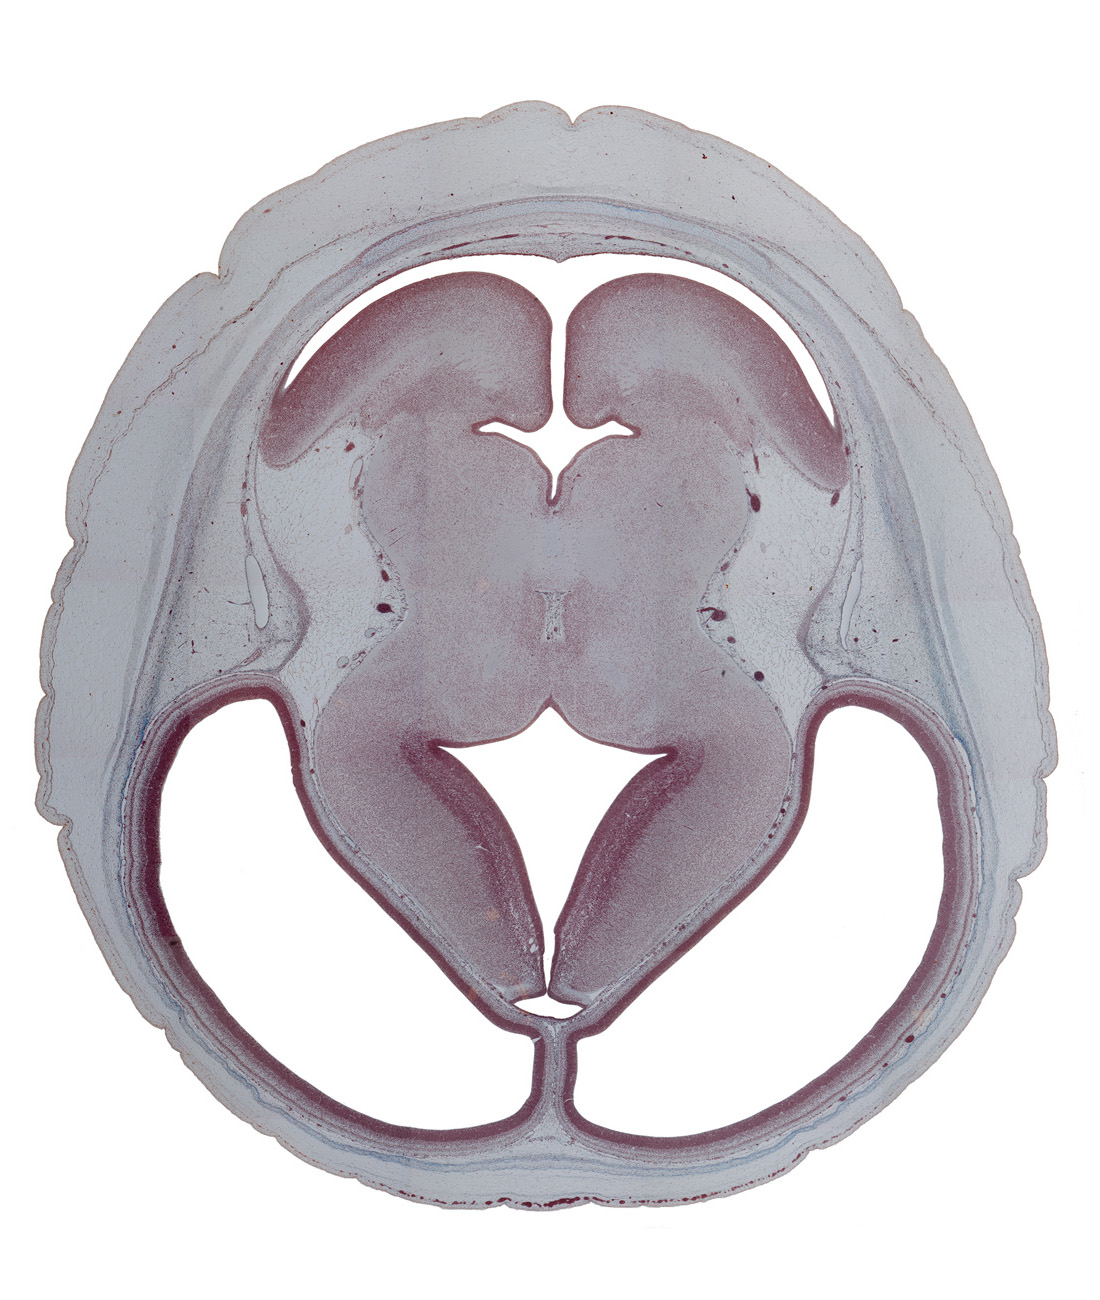 basis pedunculi of pons region (metencephalon), cerebral aqueduct (mesocoele), cerebral hemisphere, dorsal thalamus, hypothalamic sulcus, internal fiber layer (cerebellum), lateral ventricle, median sulcus, mesencephalic artery, rhombencoel (fourth ventricle), subarachnoid space, superior cerebellar artery, superior sagittal sinus, third ventricle